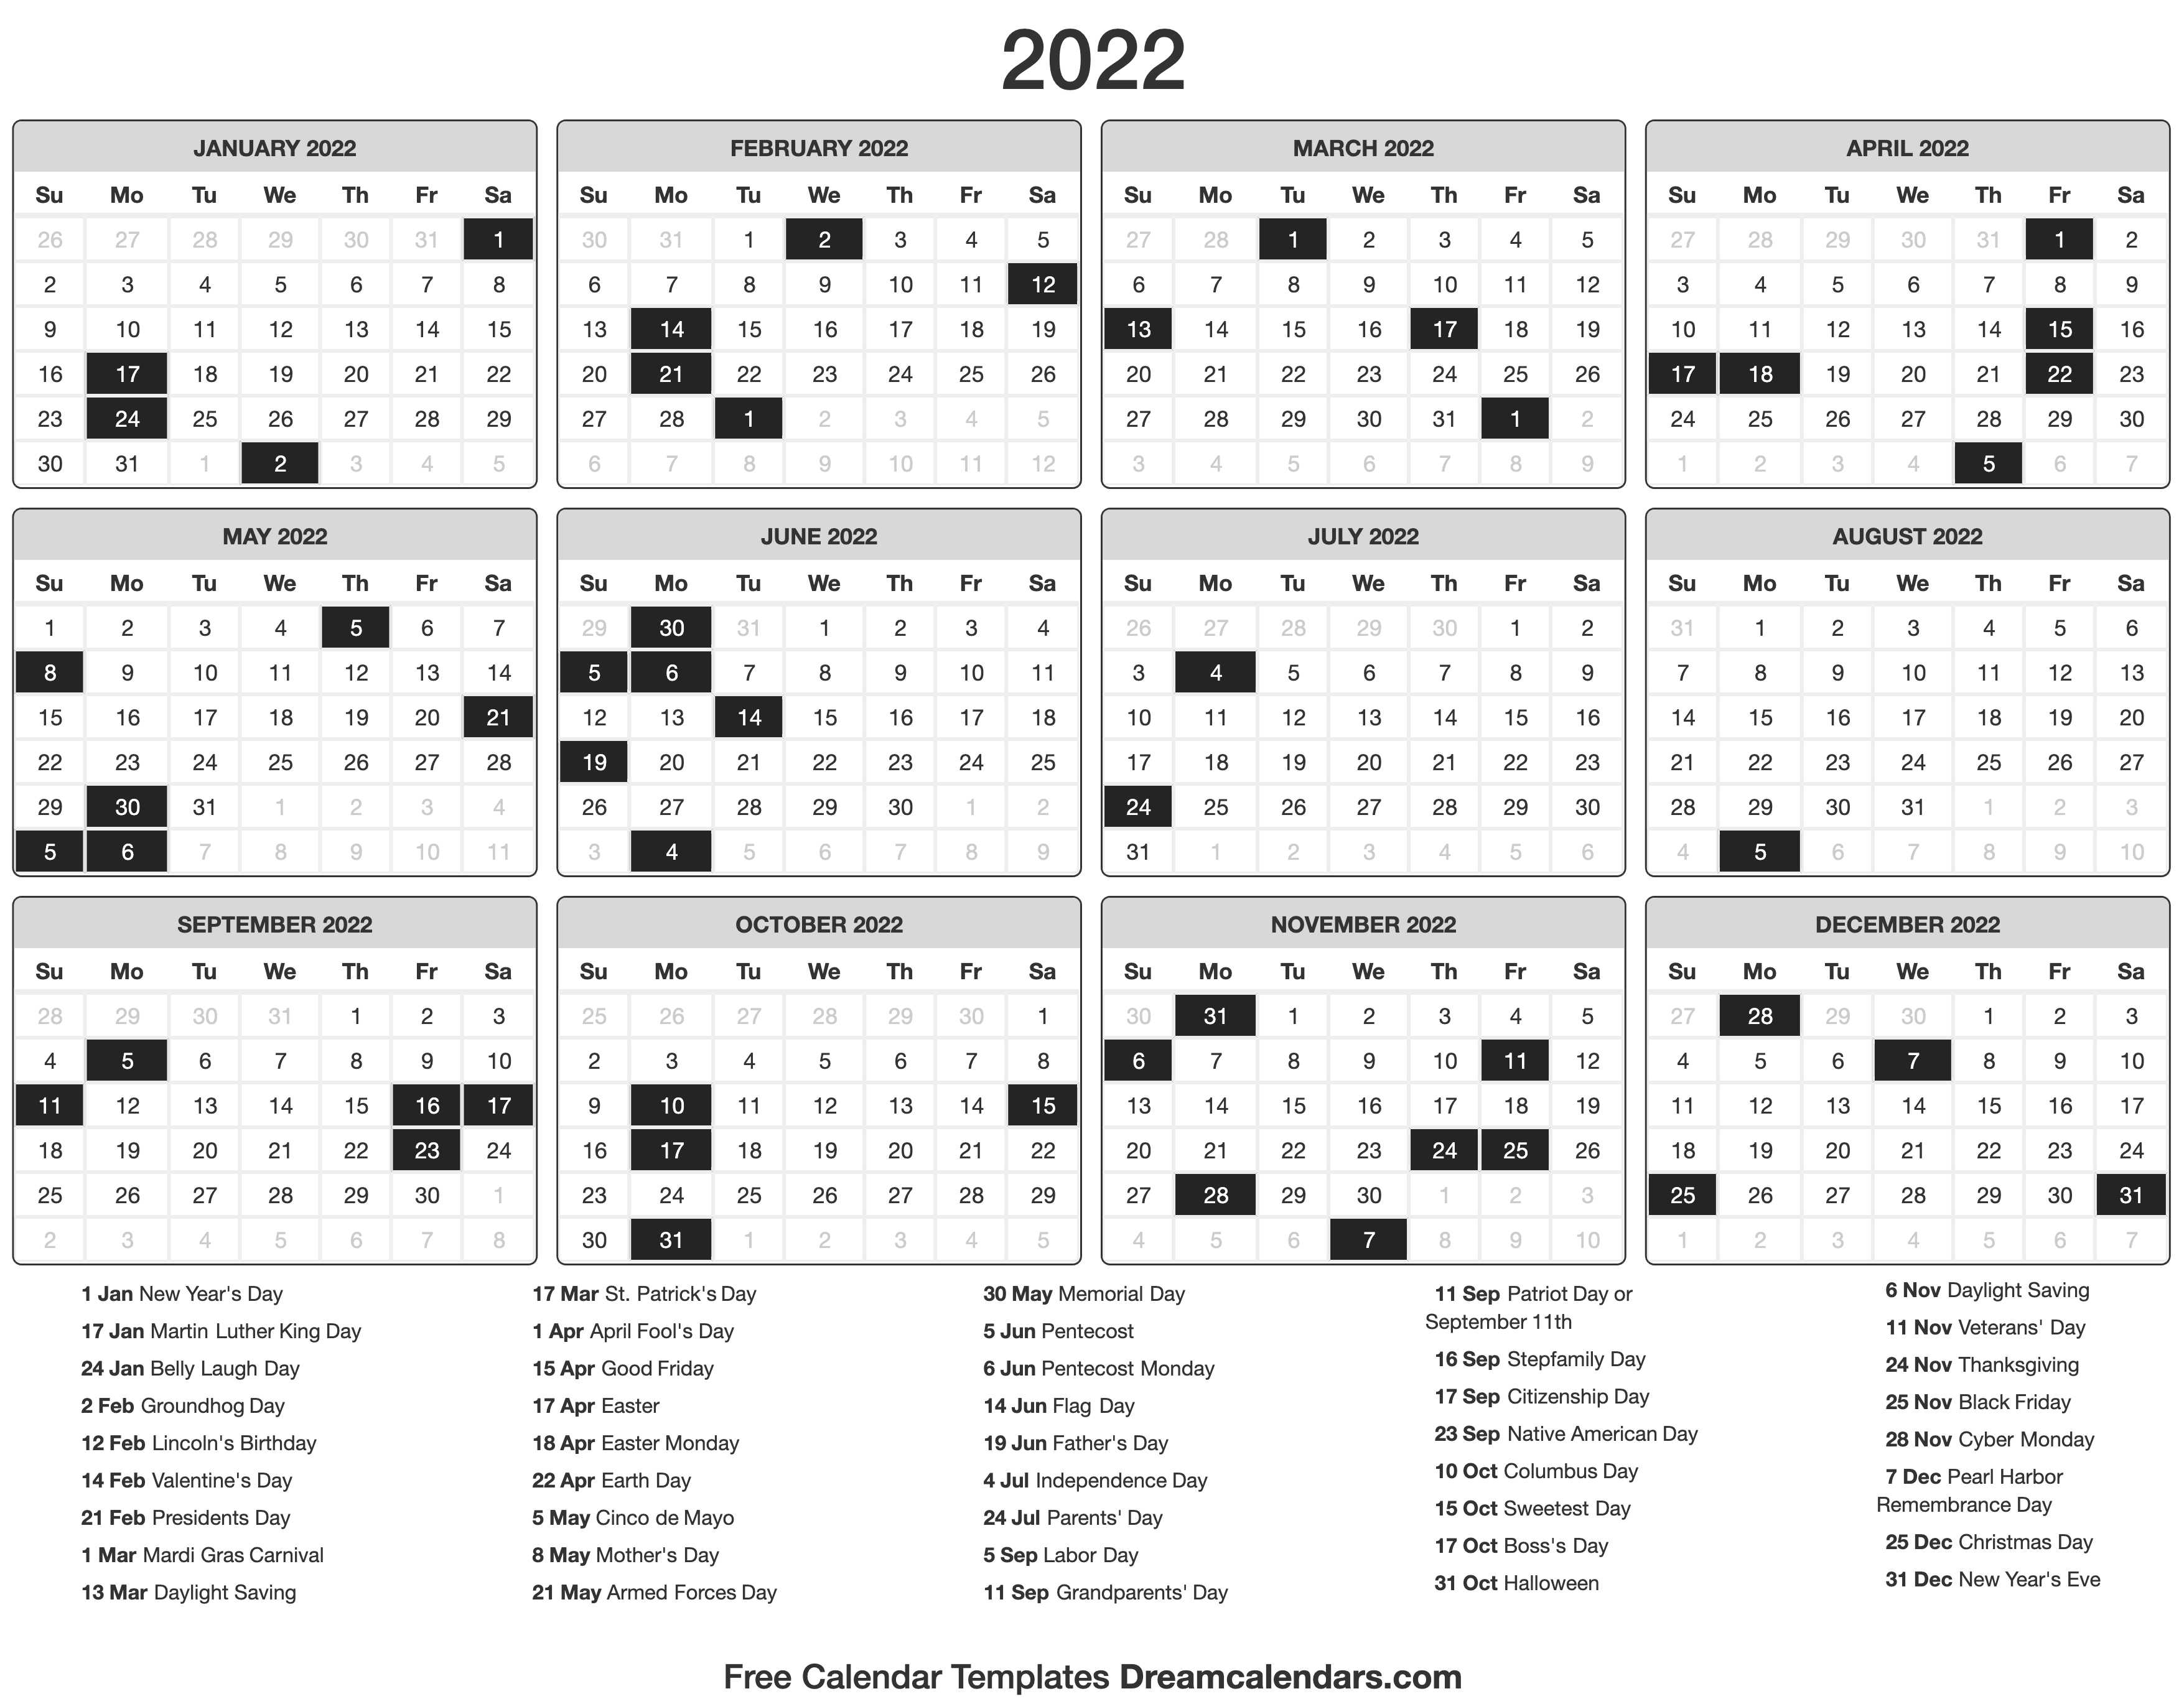 Chinese Calendar April 2022 Lunar Dates Auspicious Dates And Times